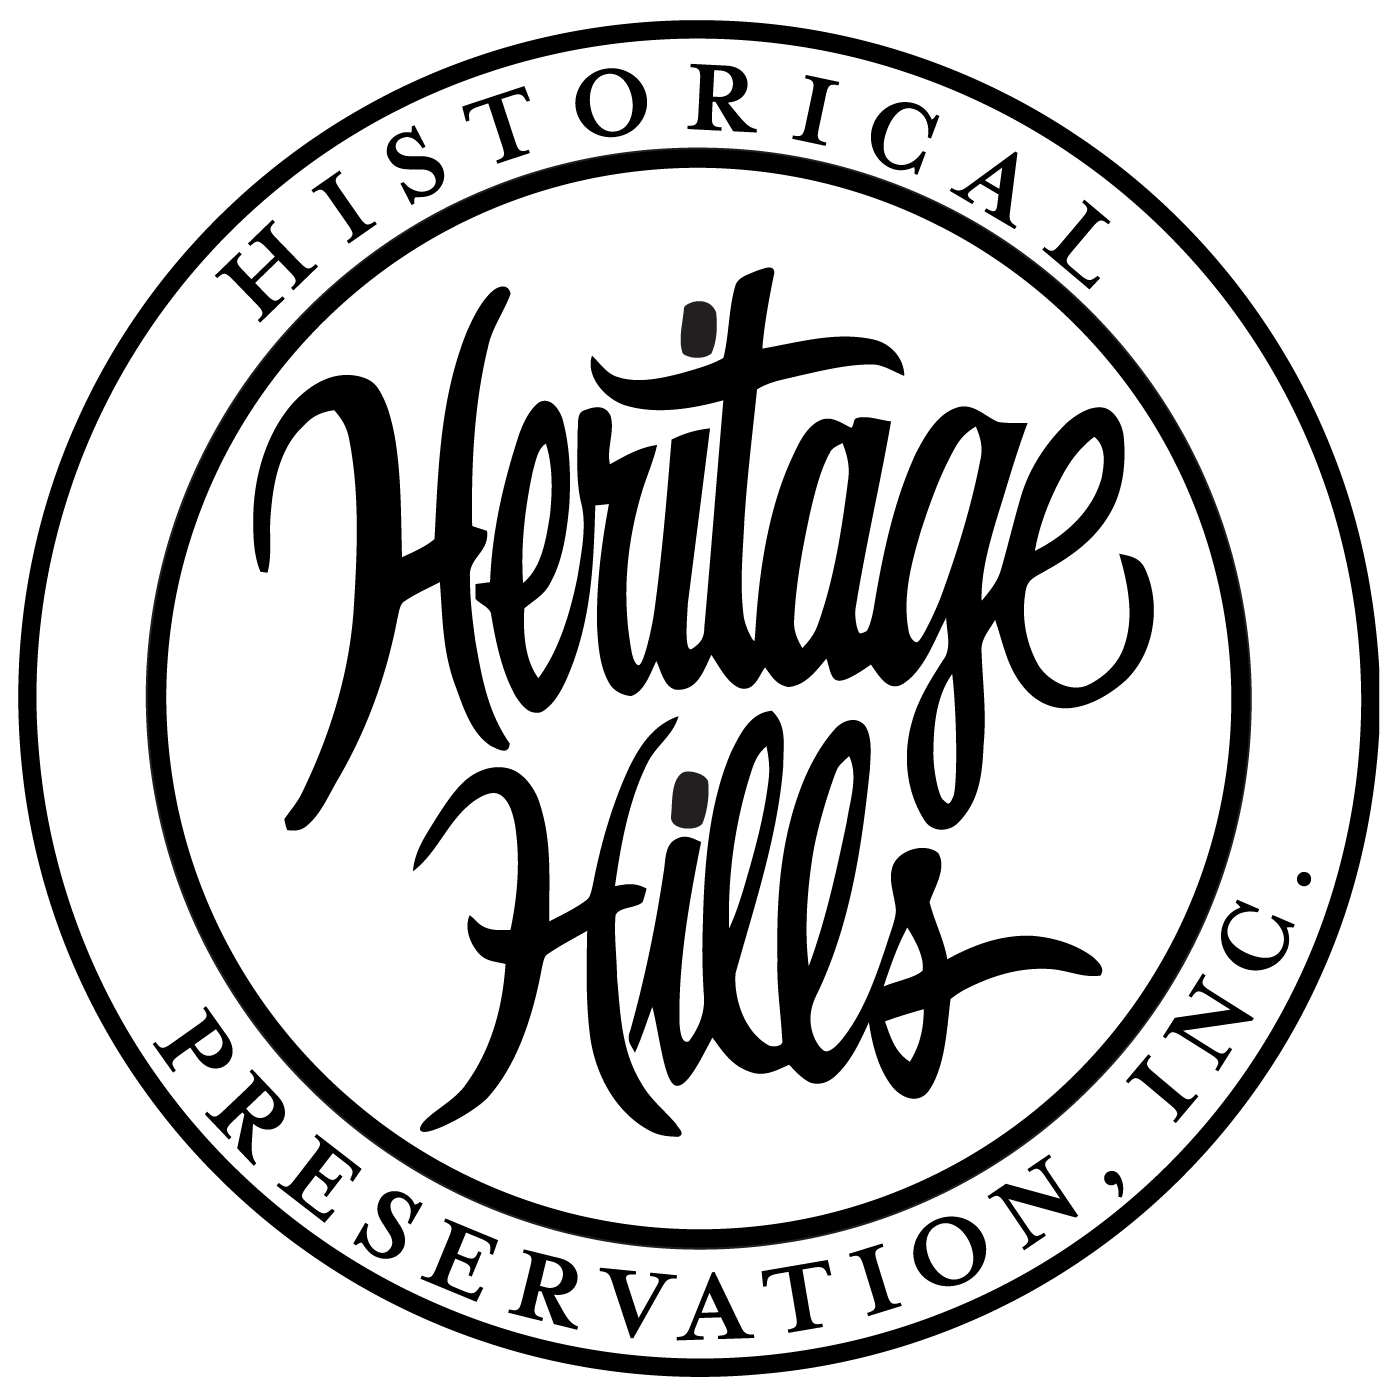 Historical Preservation, Inc